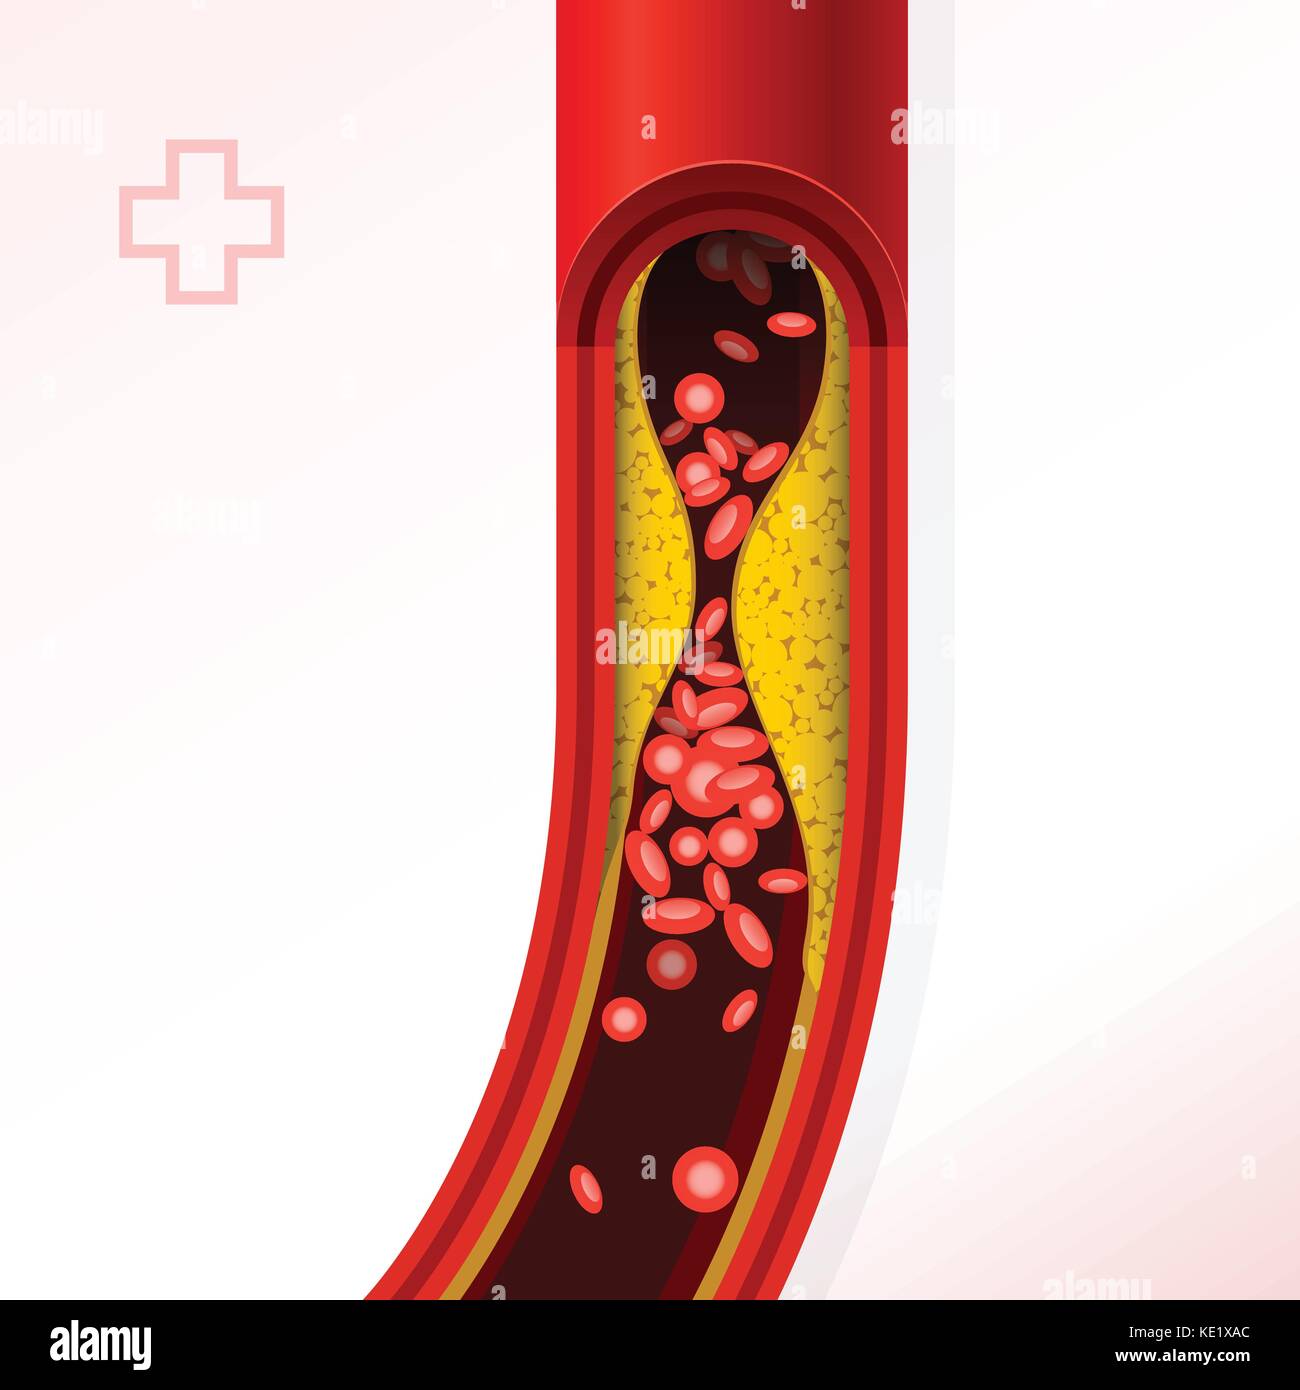 Arterie Abschnitt mit Cholesterin Anhaftungen - Cholesterin und Thrombosen Stock Vektor